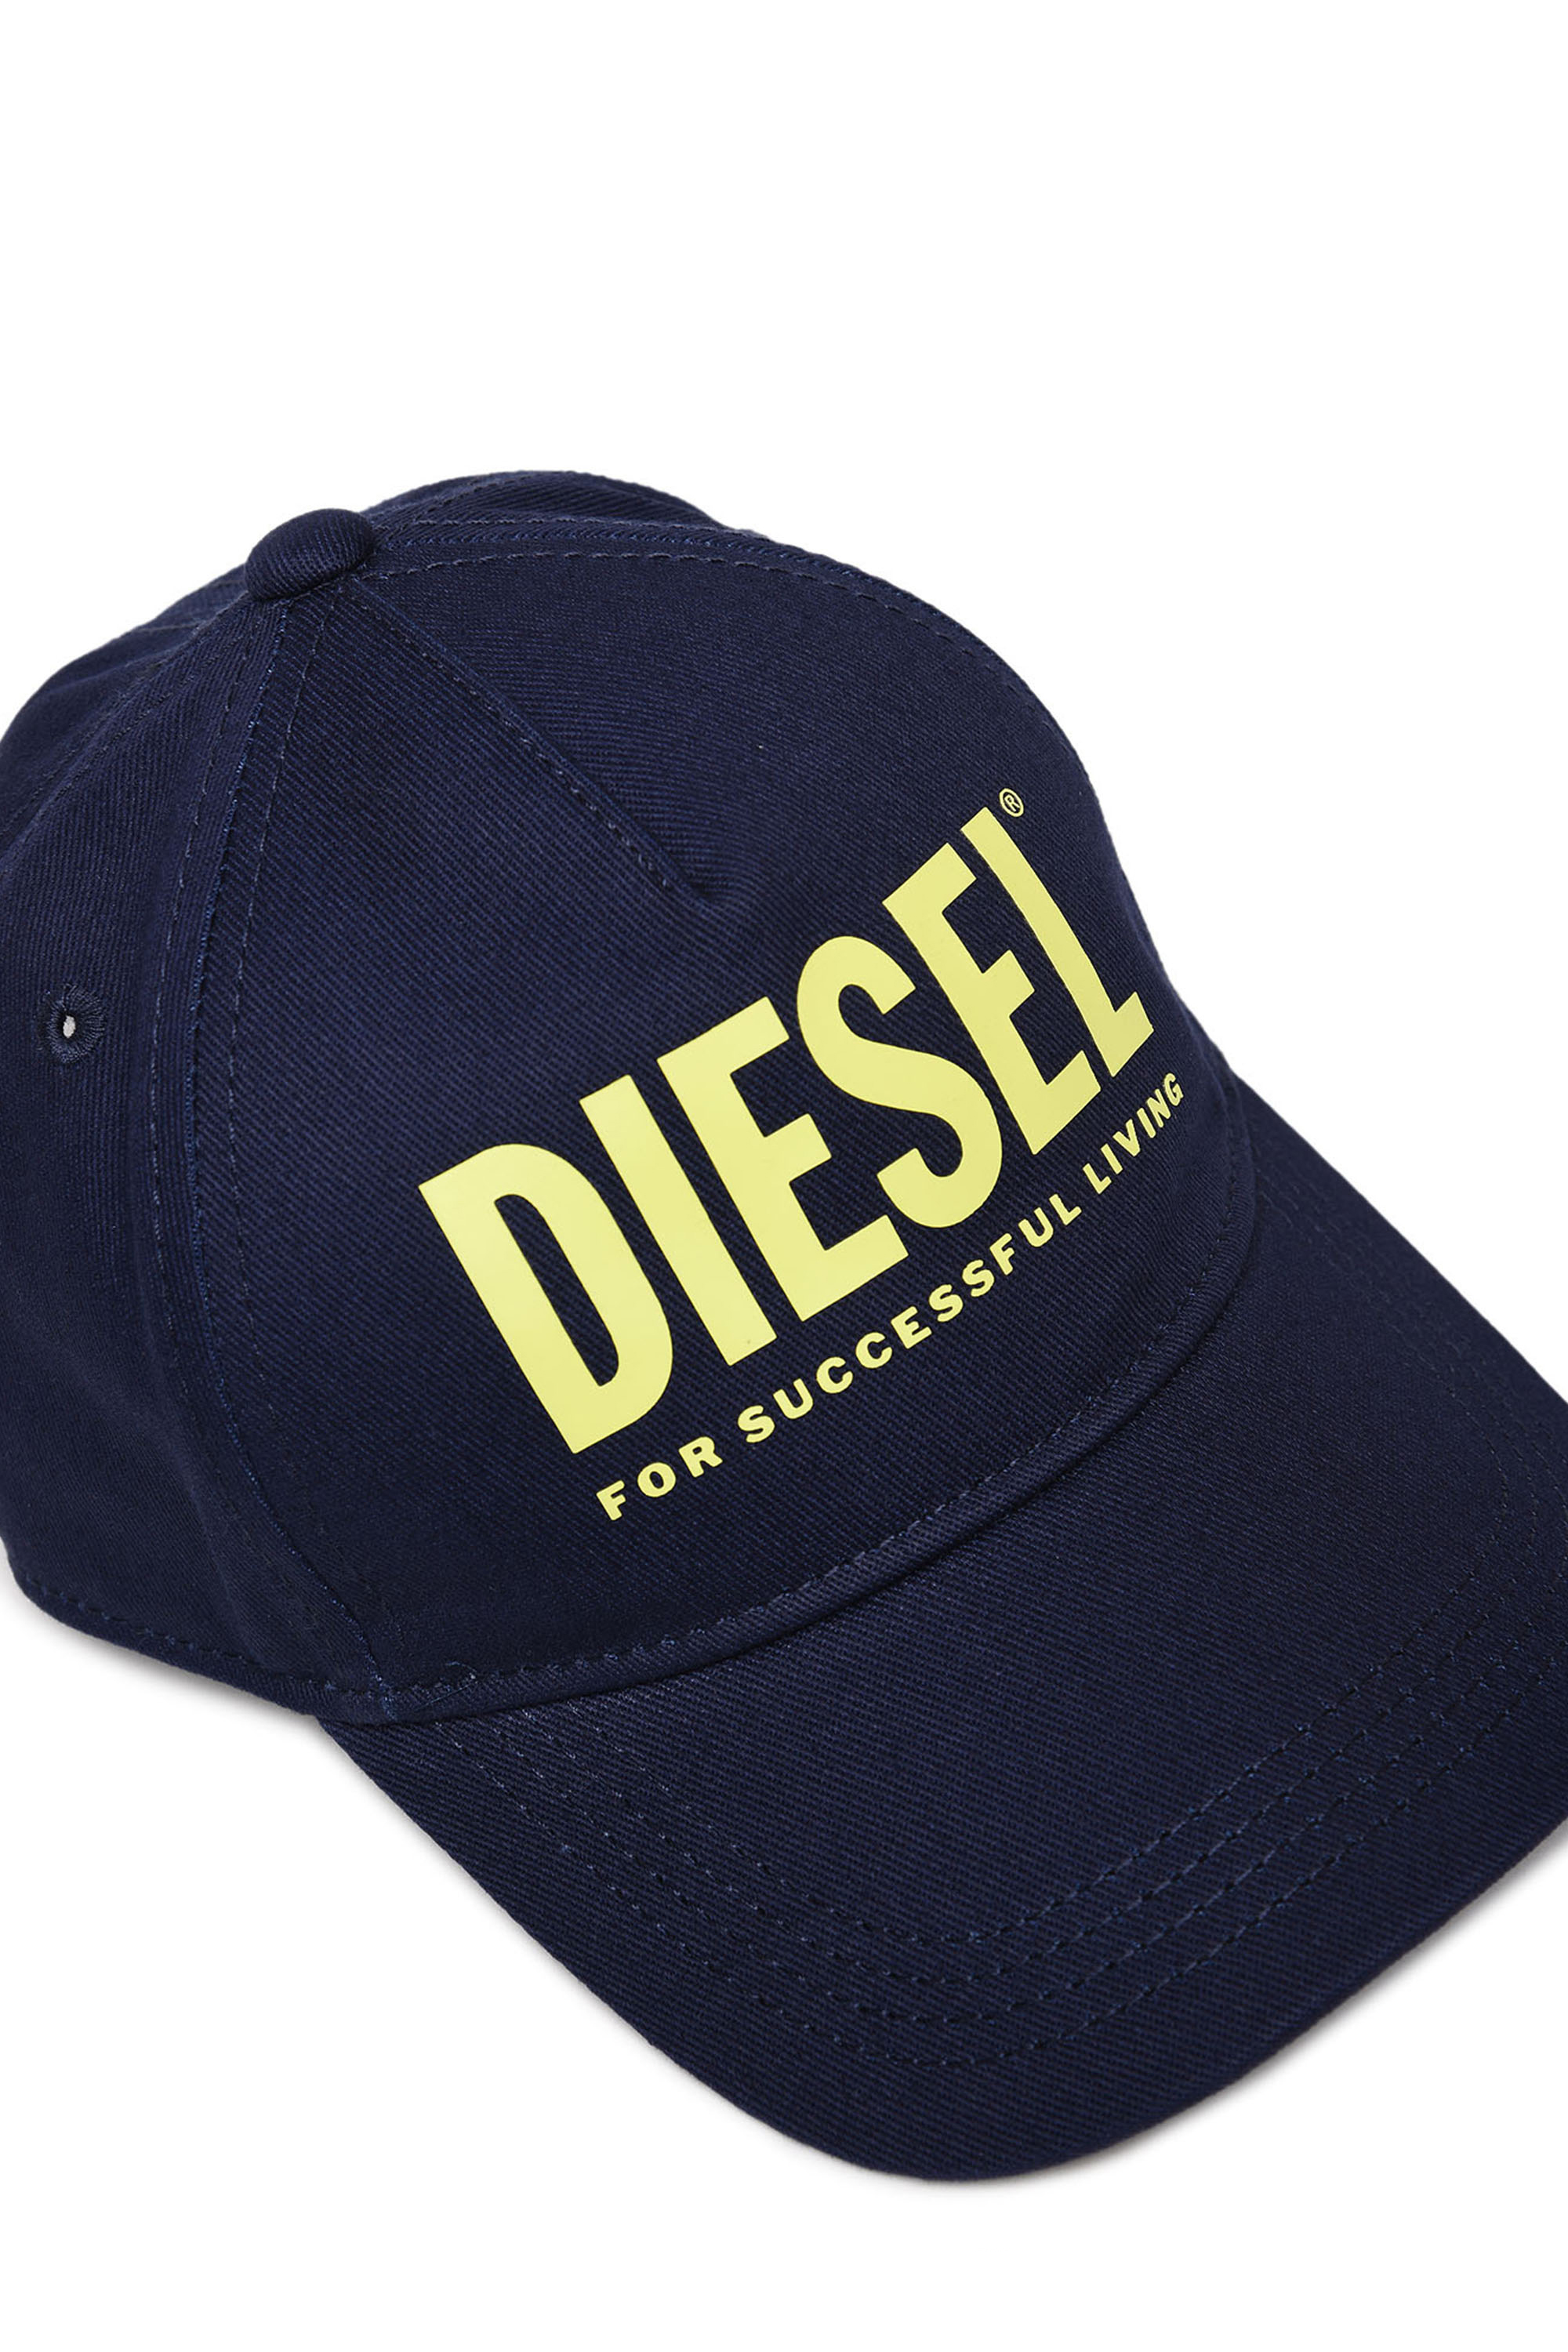 Diesel - FTOLLYB, Dark Blue - Image 3